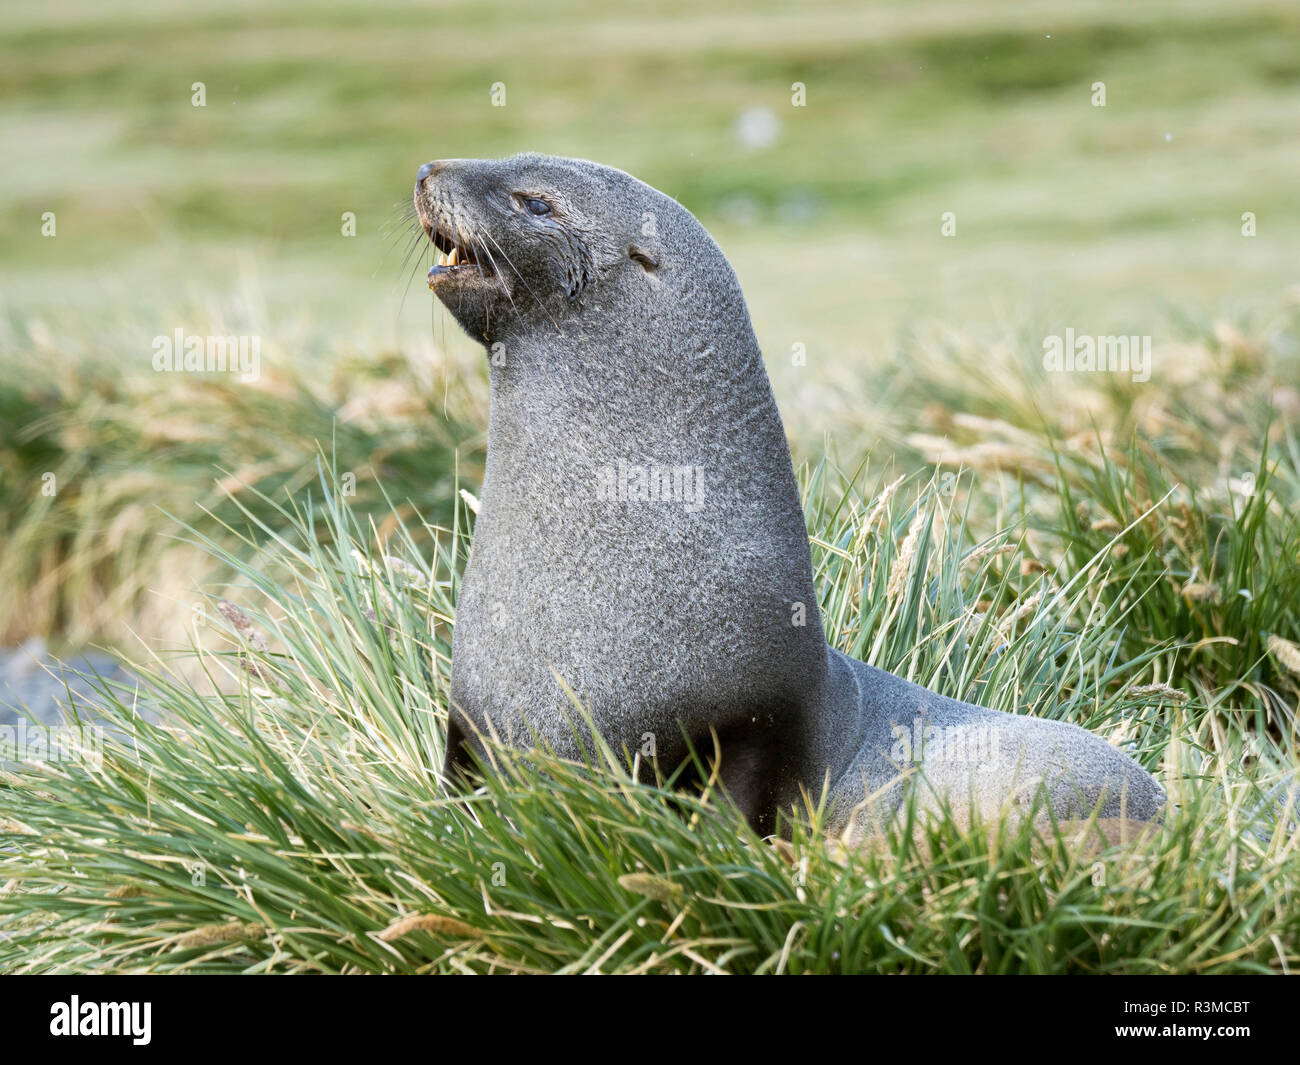 Antarctic Fur Seal (Arctocephalus gazella). Bull in typical Tussock Grass habitat. Stock Photo